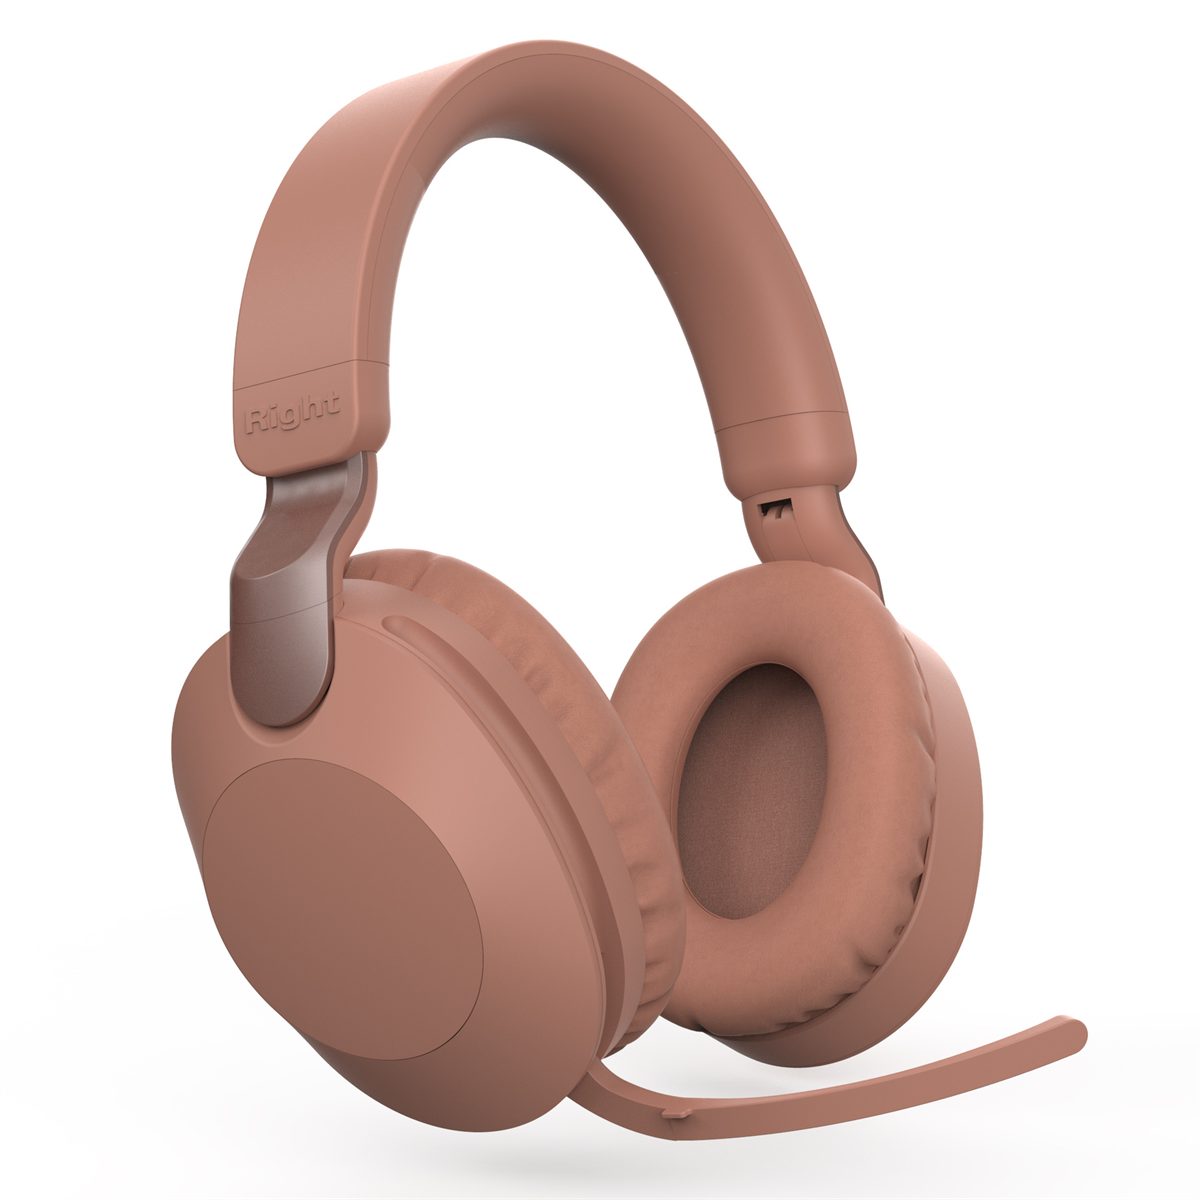 Am selected Kopf langer Akkulaufzeit befestigtes Bluetooth-Gaming-Headset carefully mit Over-Ear-Kopfhörer Korallrot